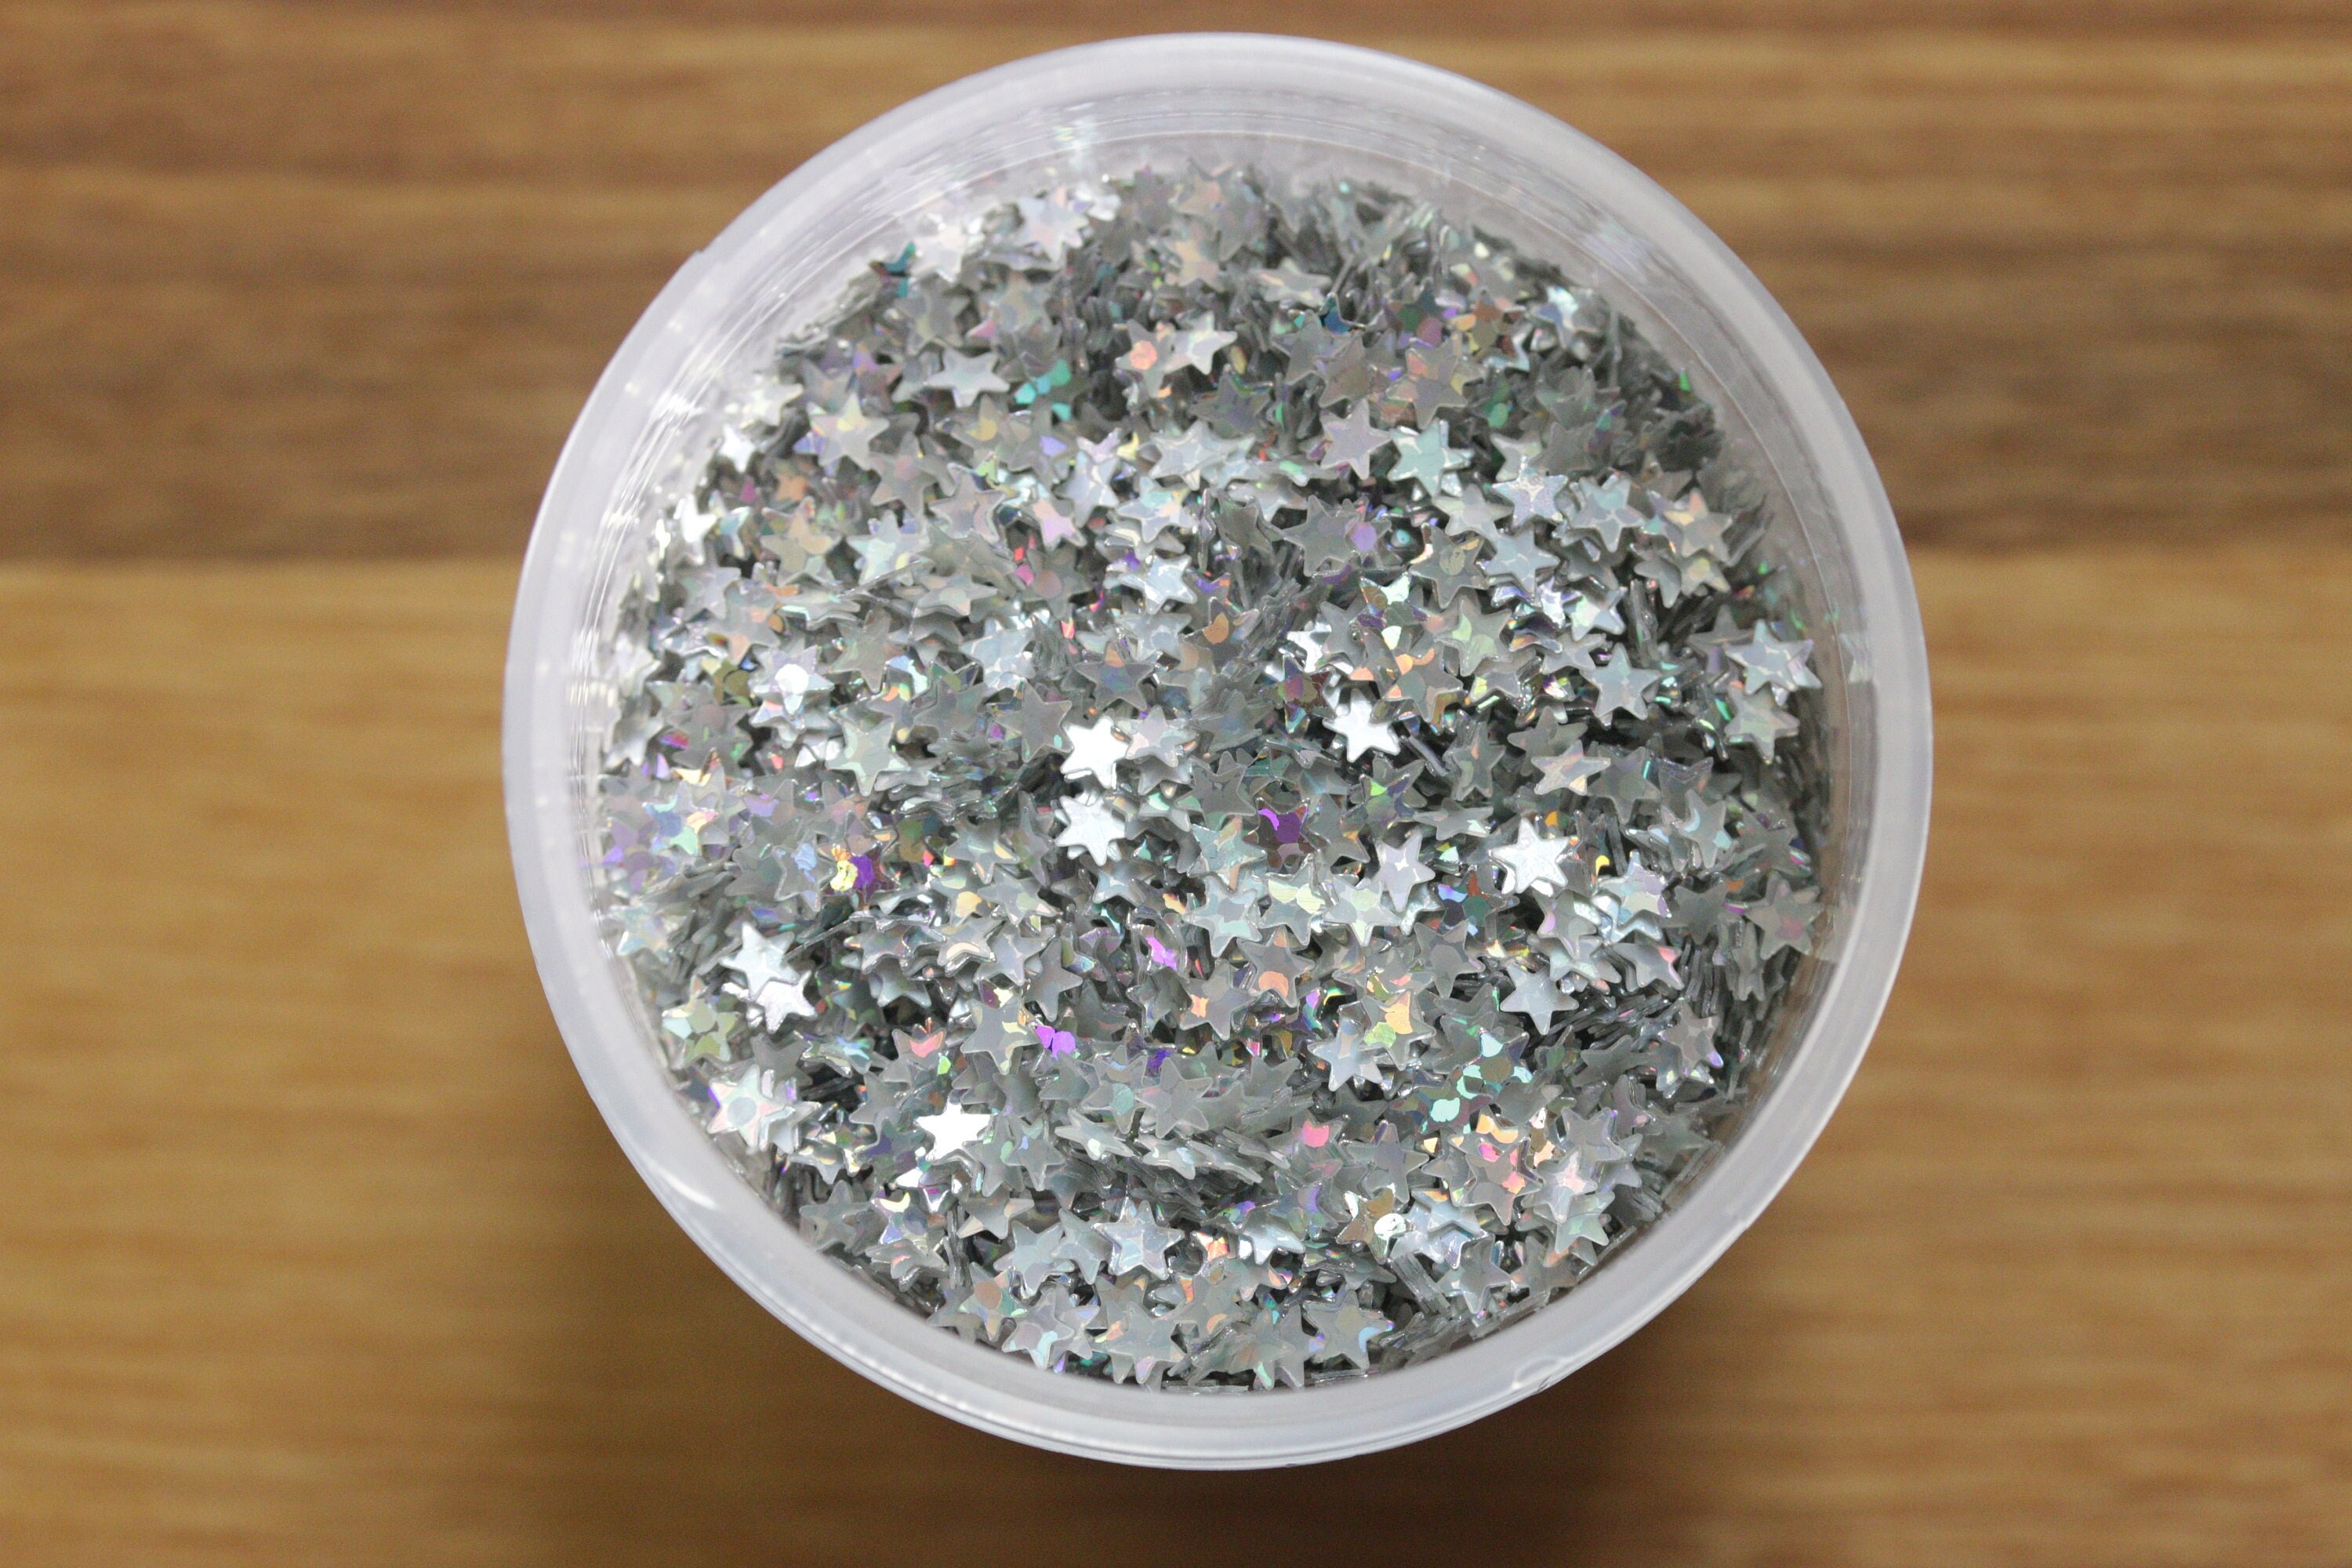 Star Biodegradable Glitter, Made in the USA, Non Toxic, Cruelty Free, 1oz, 1/8